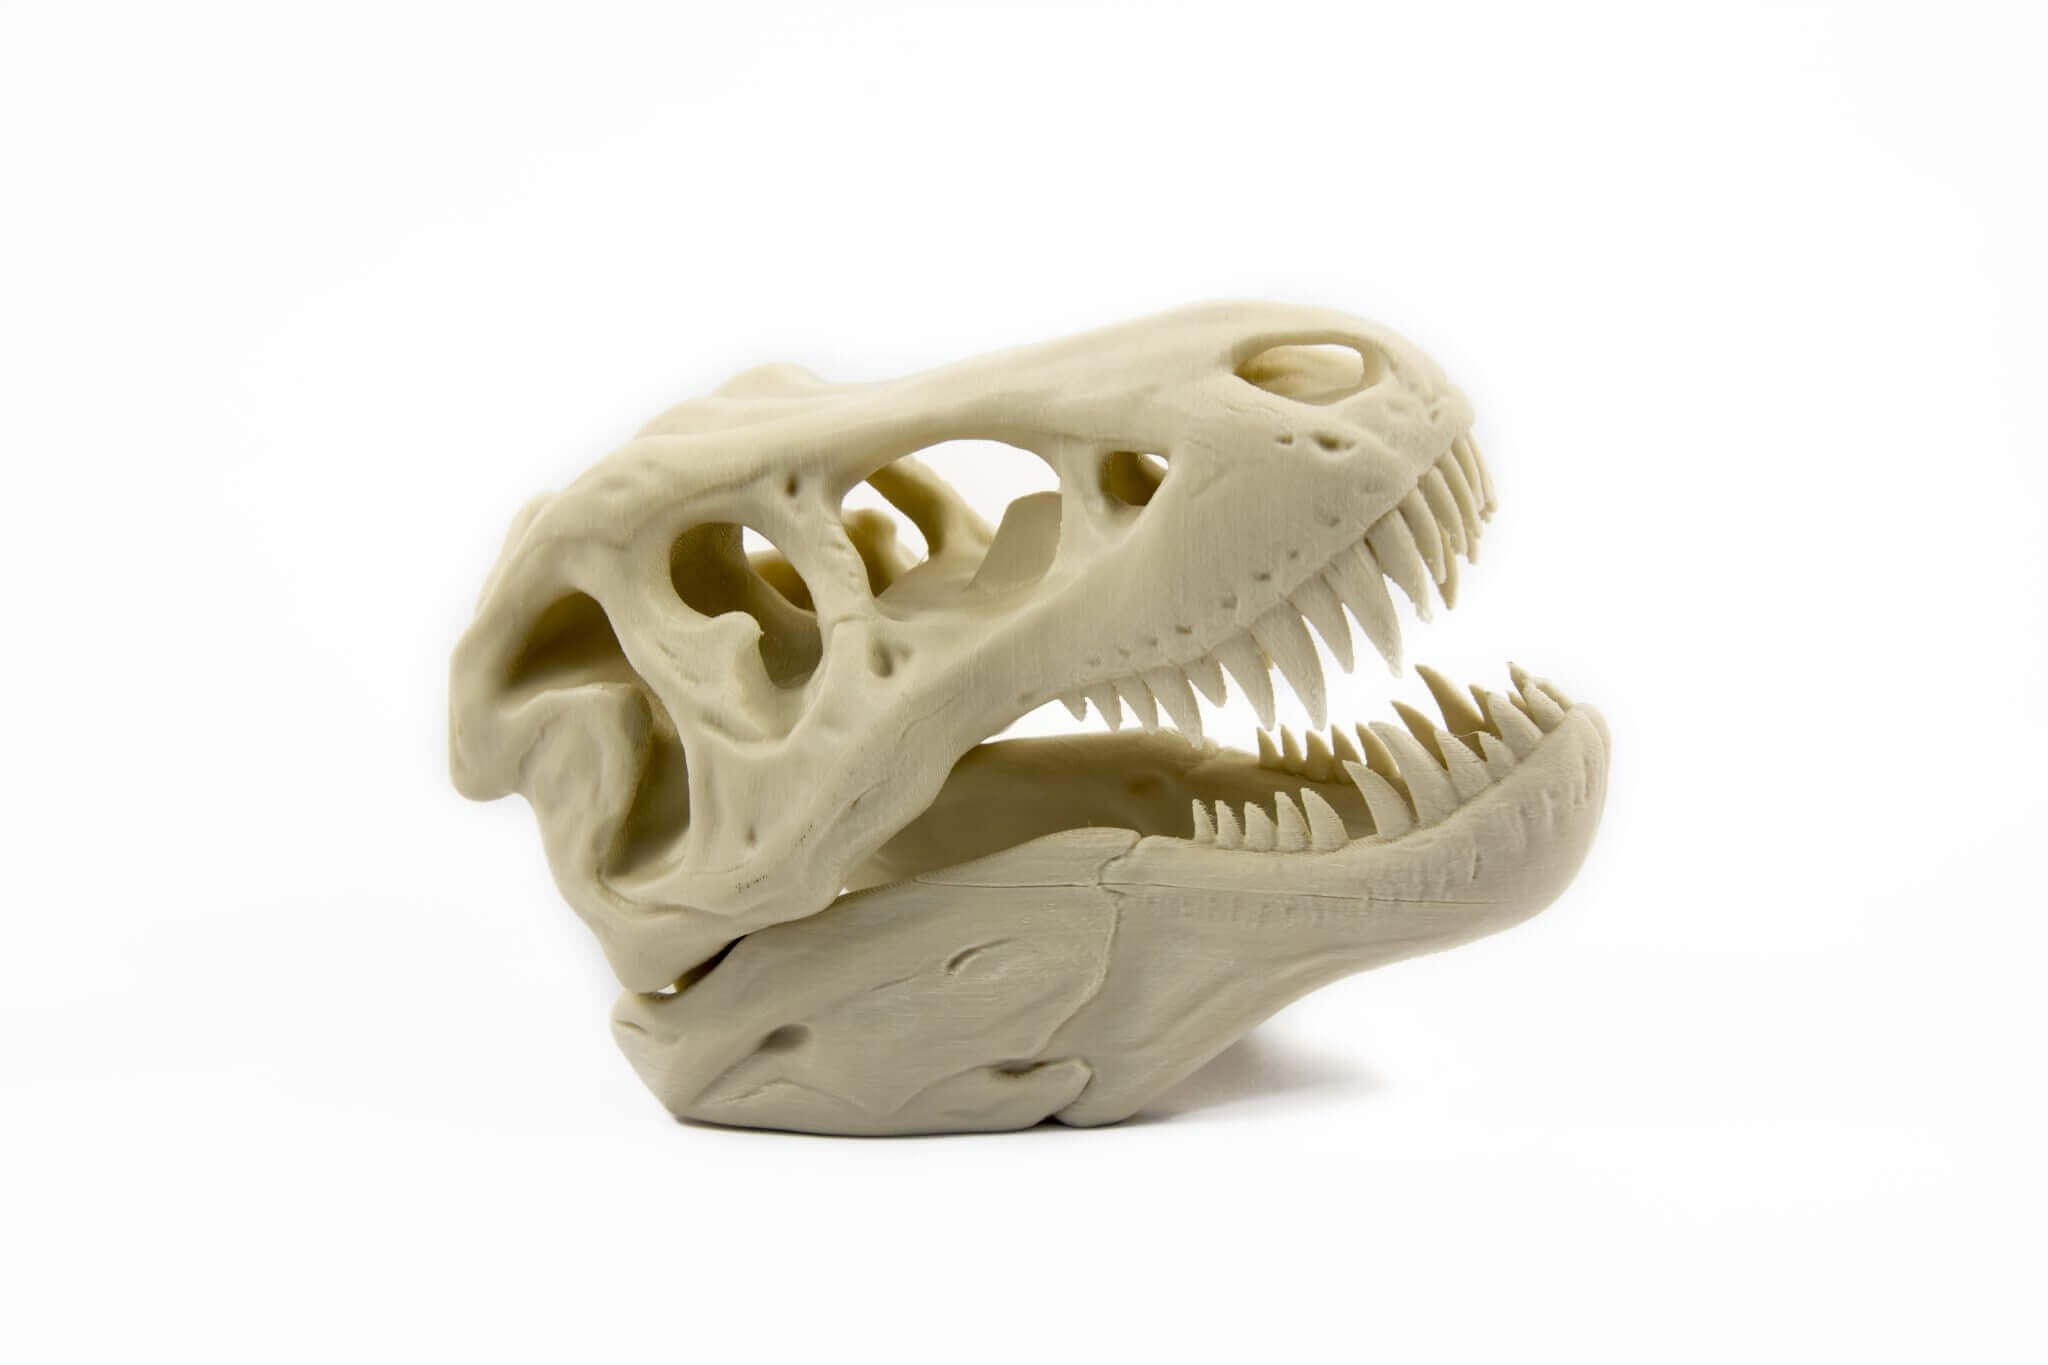 3D printed dinosaur head